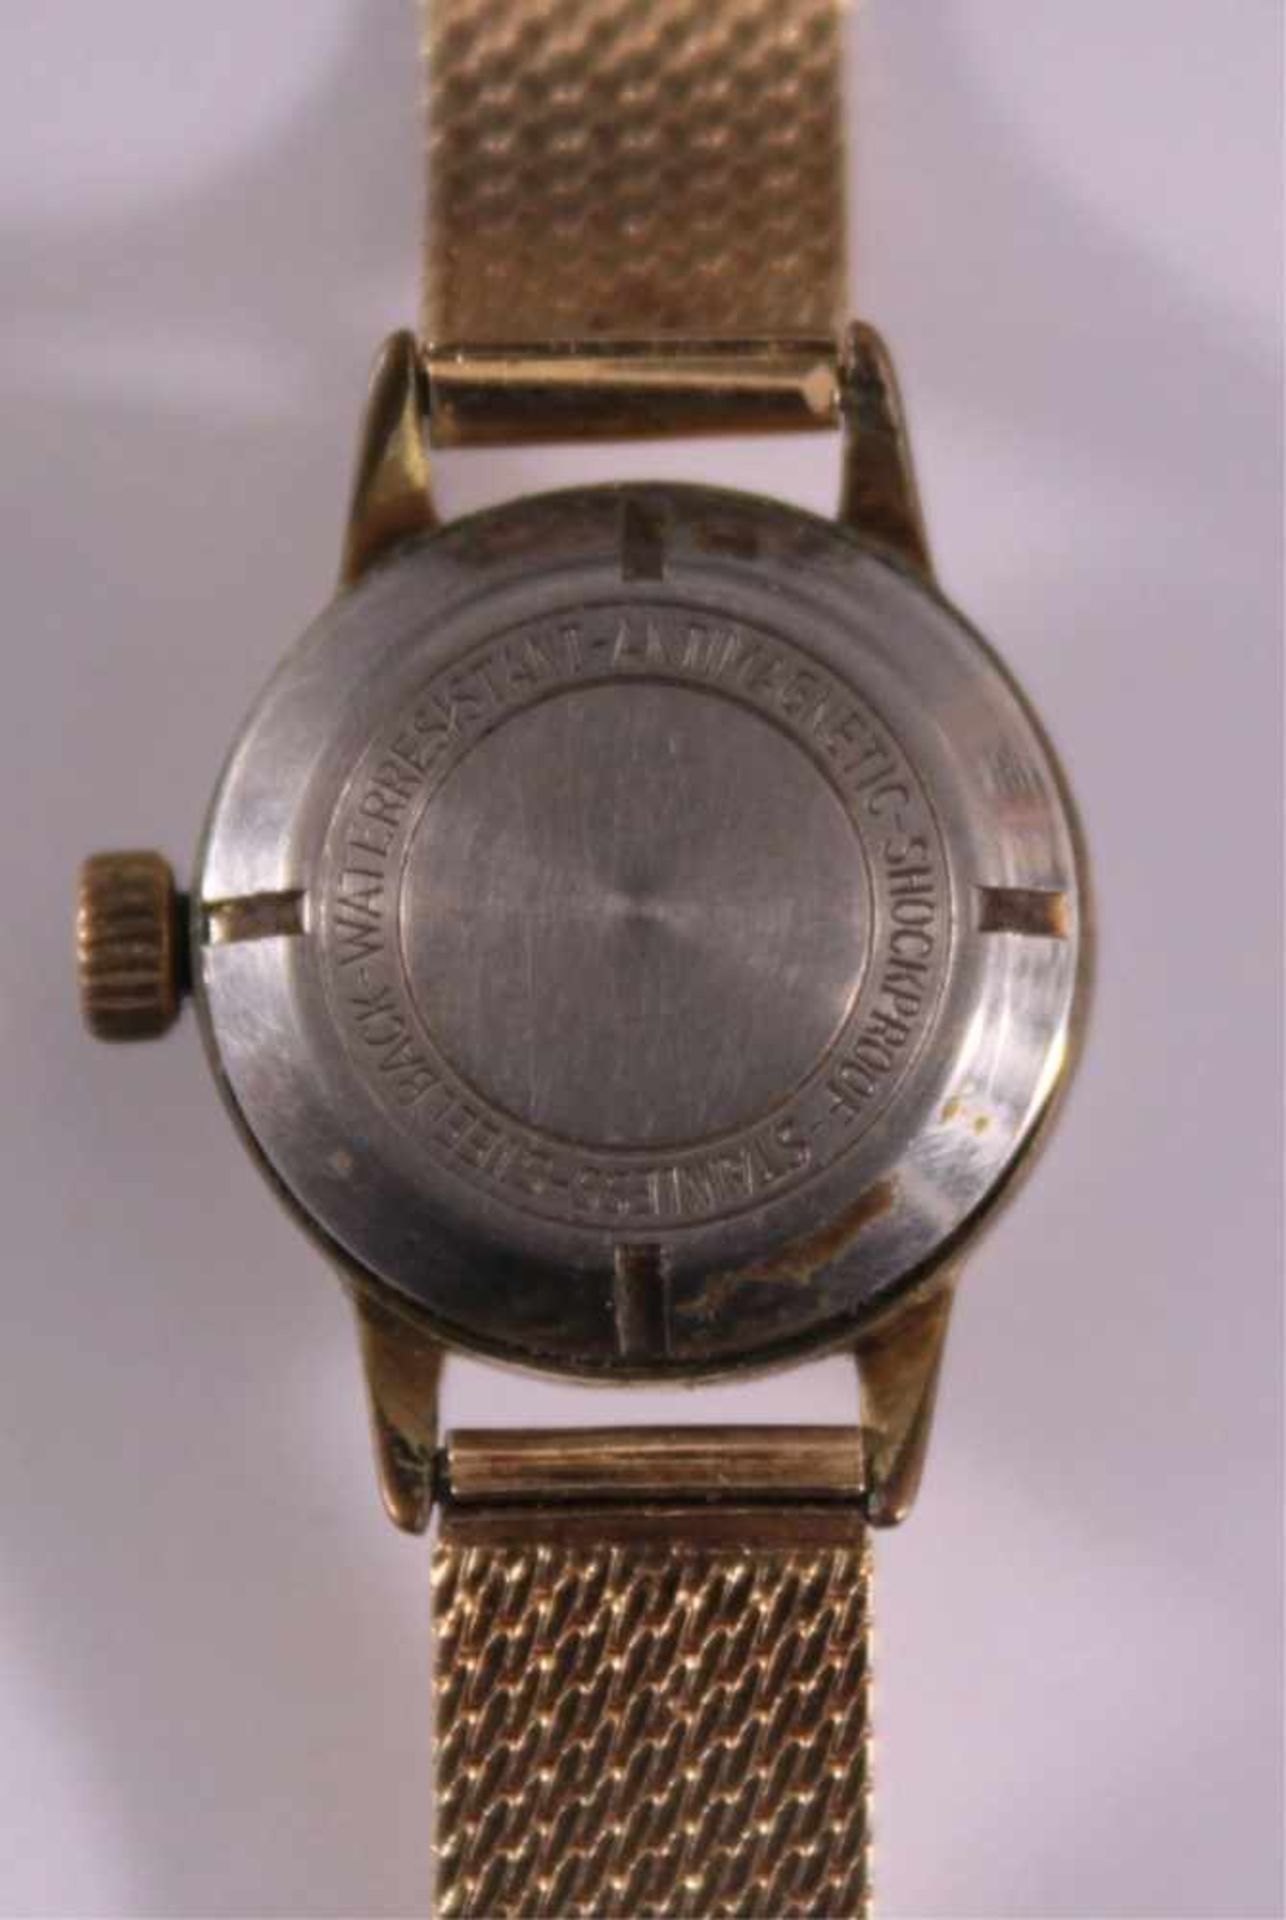 DamenarmbanduhrLondon Incabloc, Uhrwerksgehäuse vergoldet, sehr starkberieben, Funktion geprüft. - Bild 4 aus 6